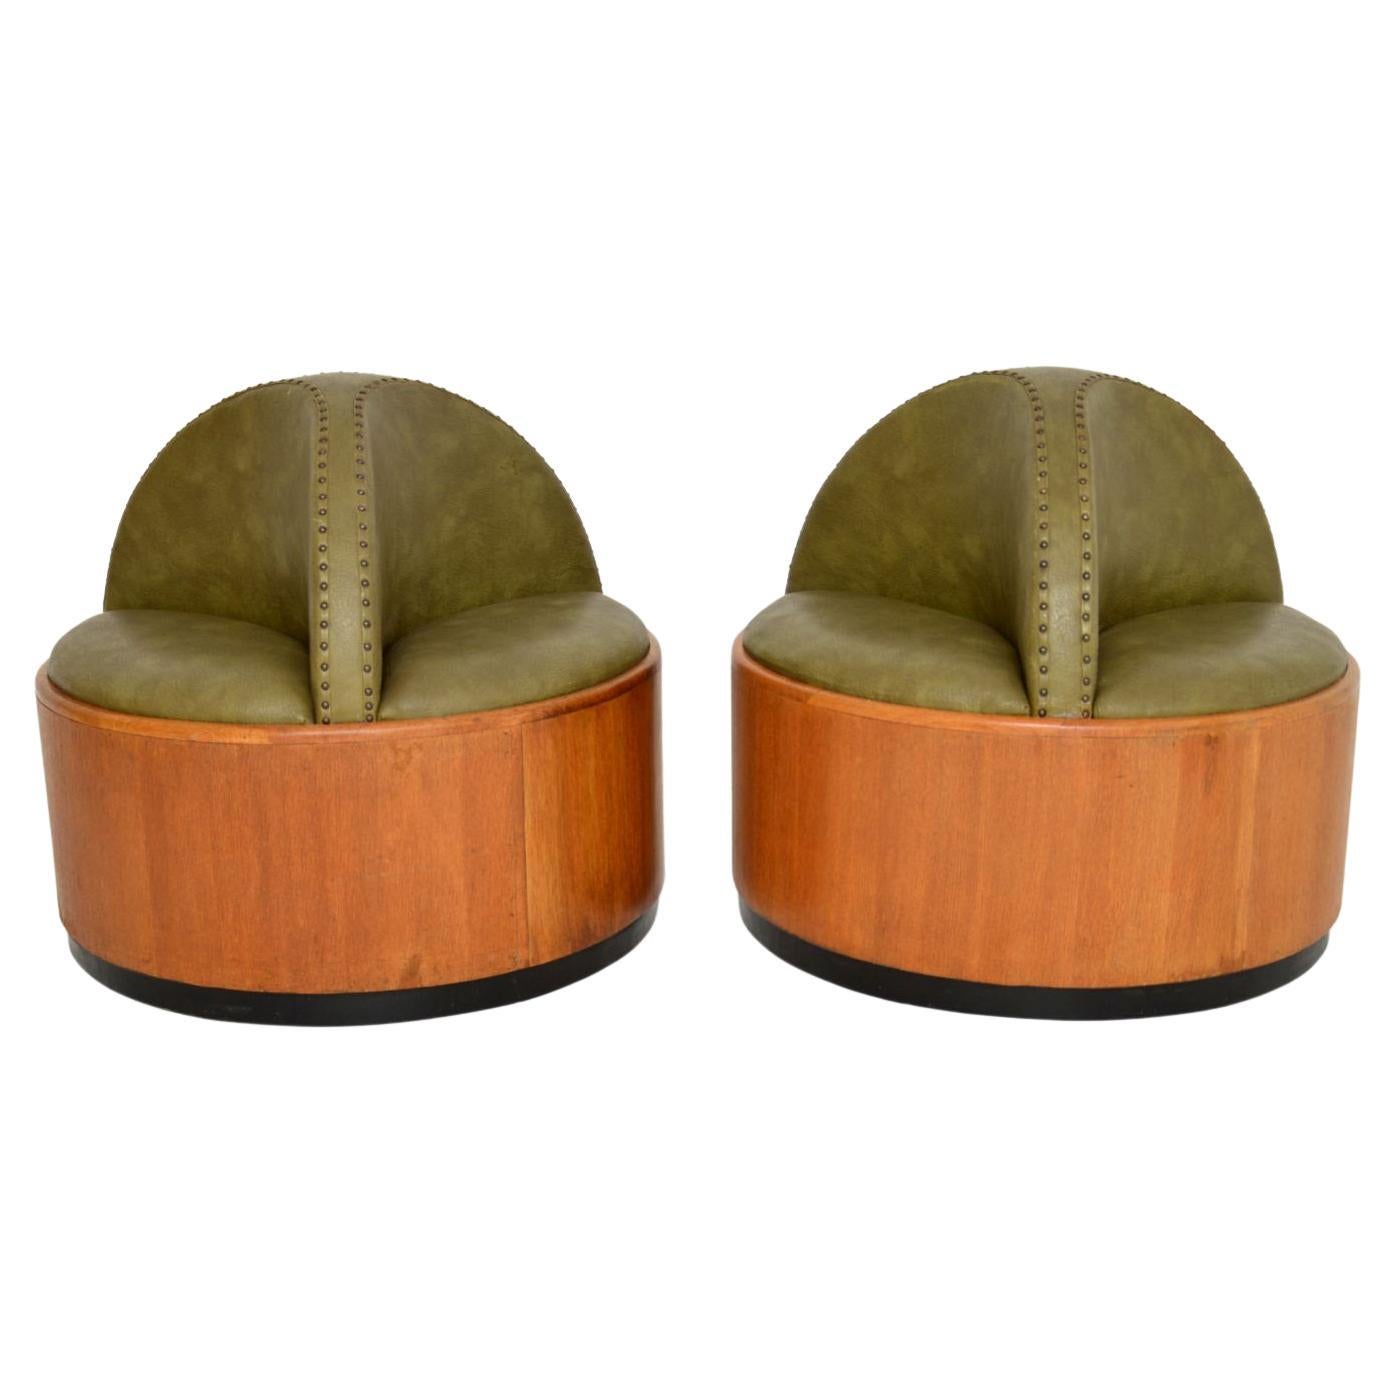 Pair of Original Art Deco Period Oak Conversation Seats